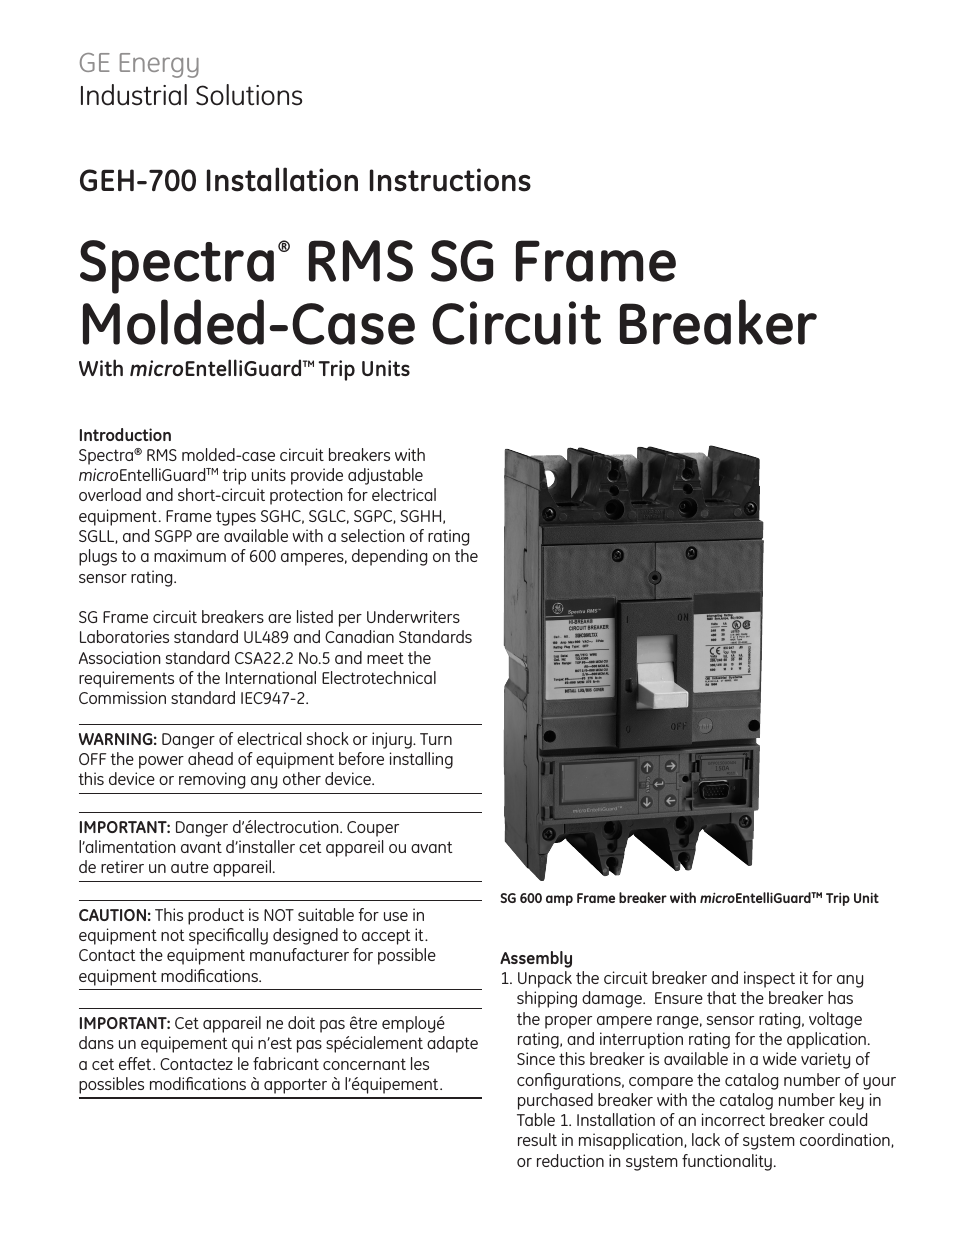 Spectra G-Frame MCCB with microEntelliGuard trip unit